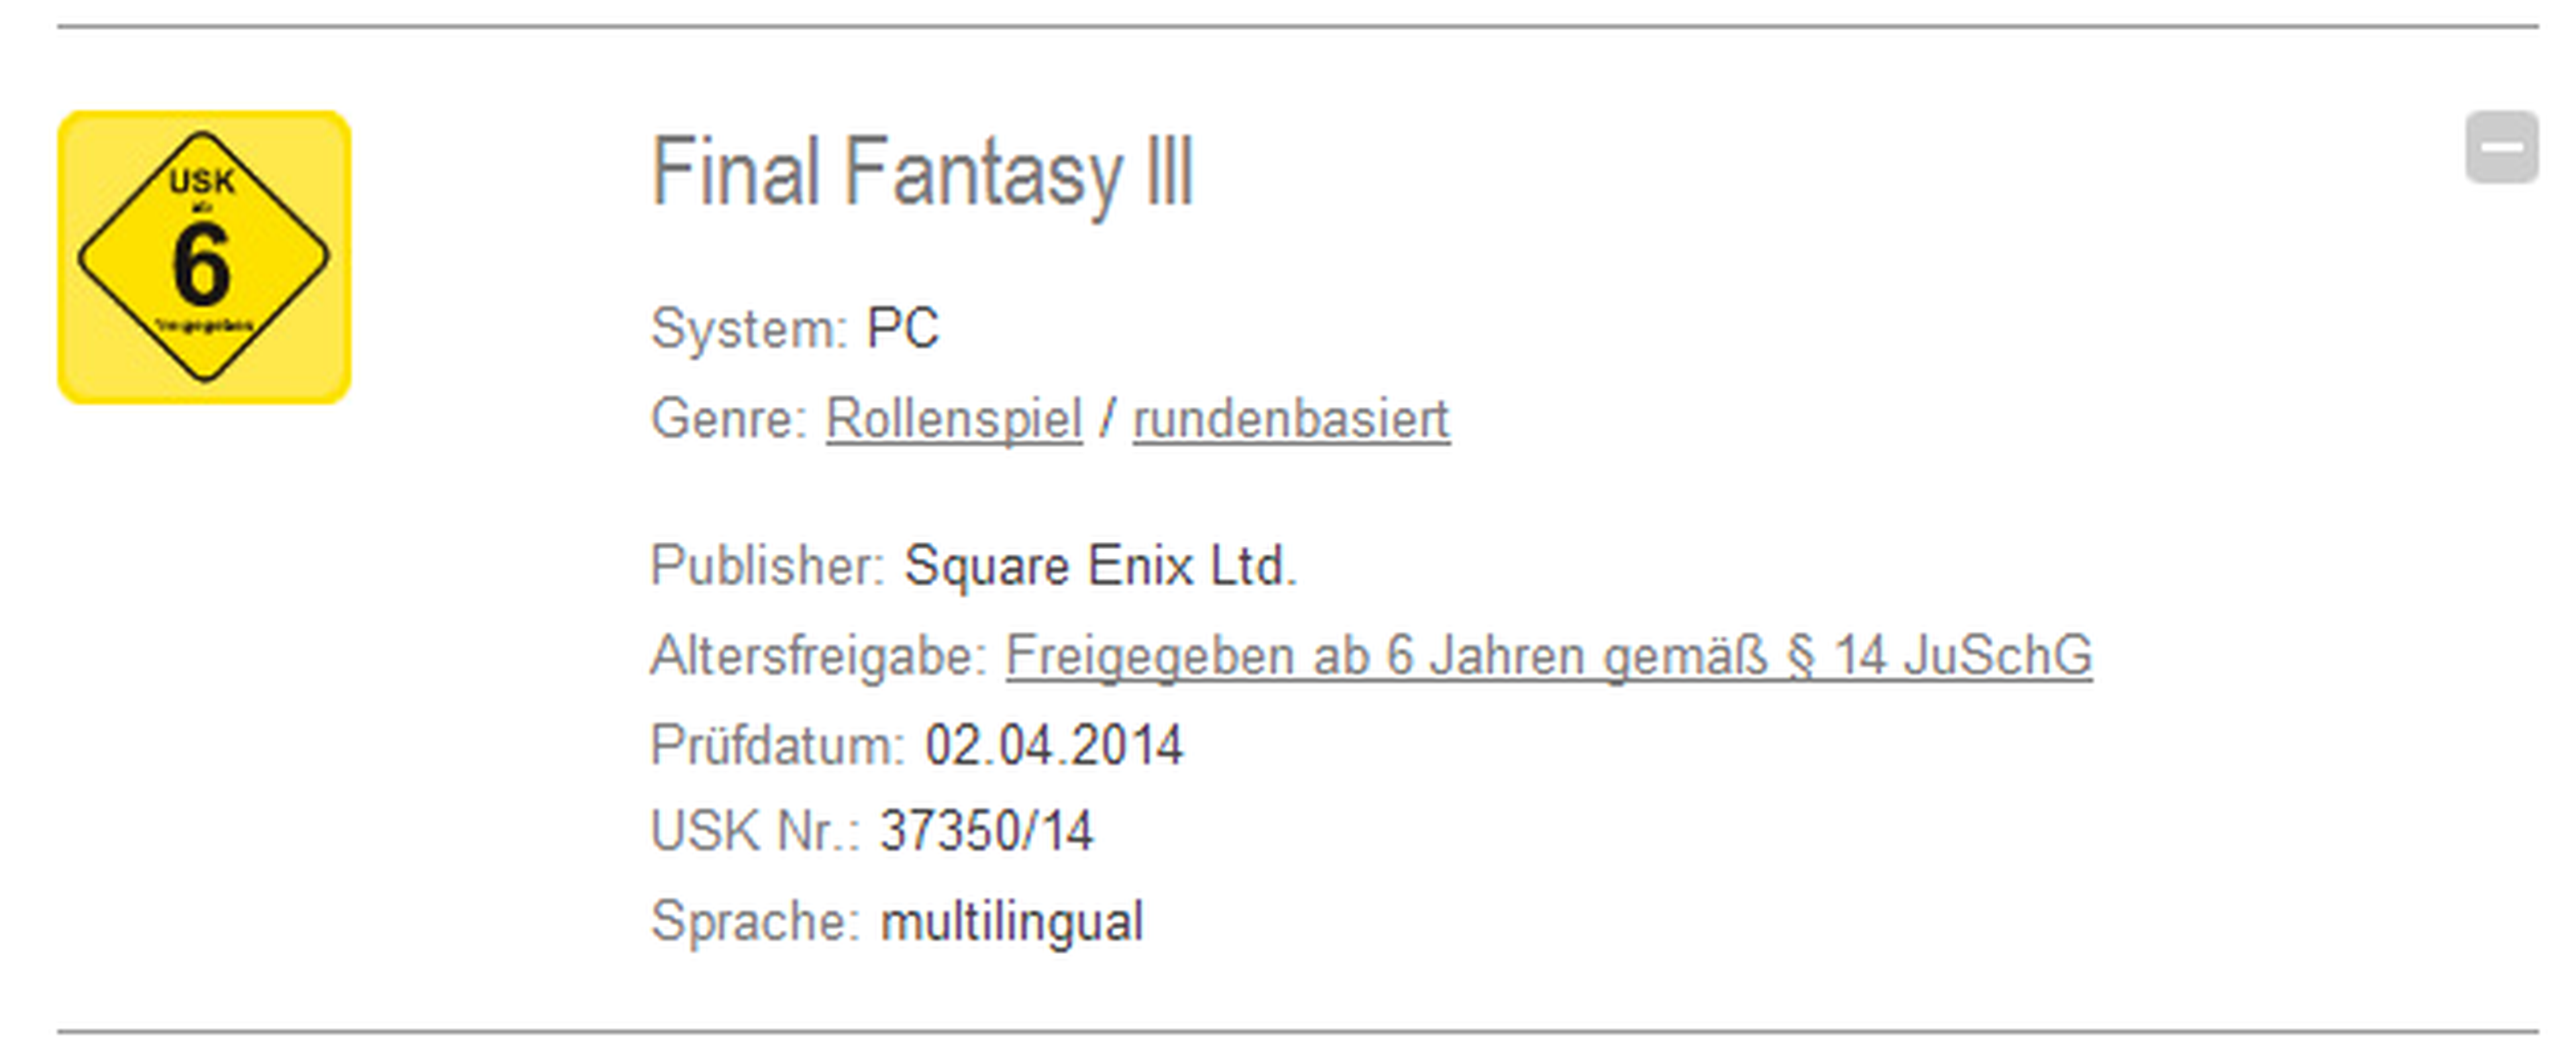 Final Fantasy III llegará a PC